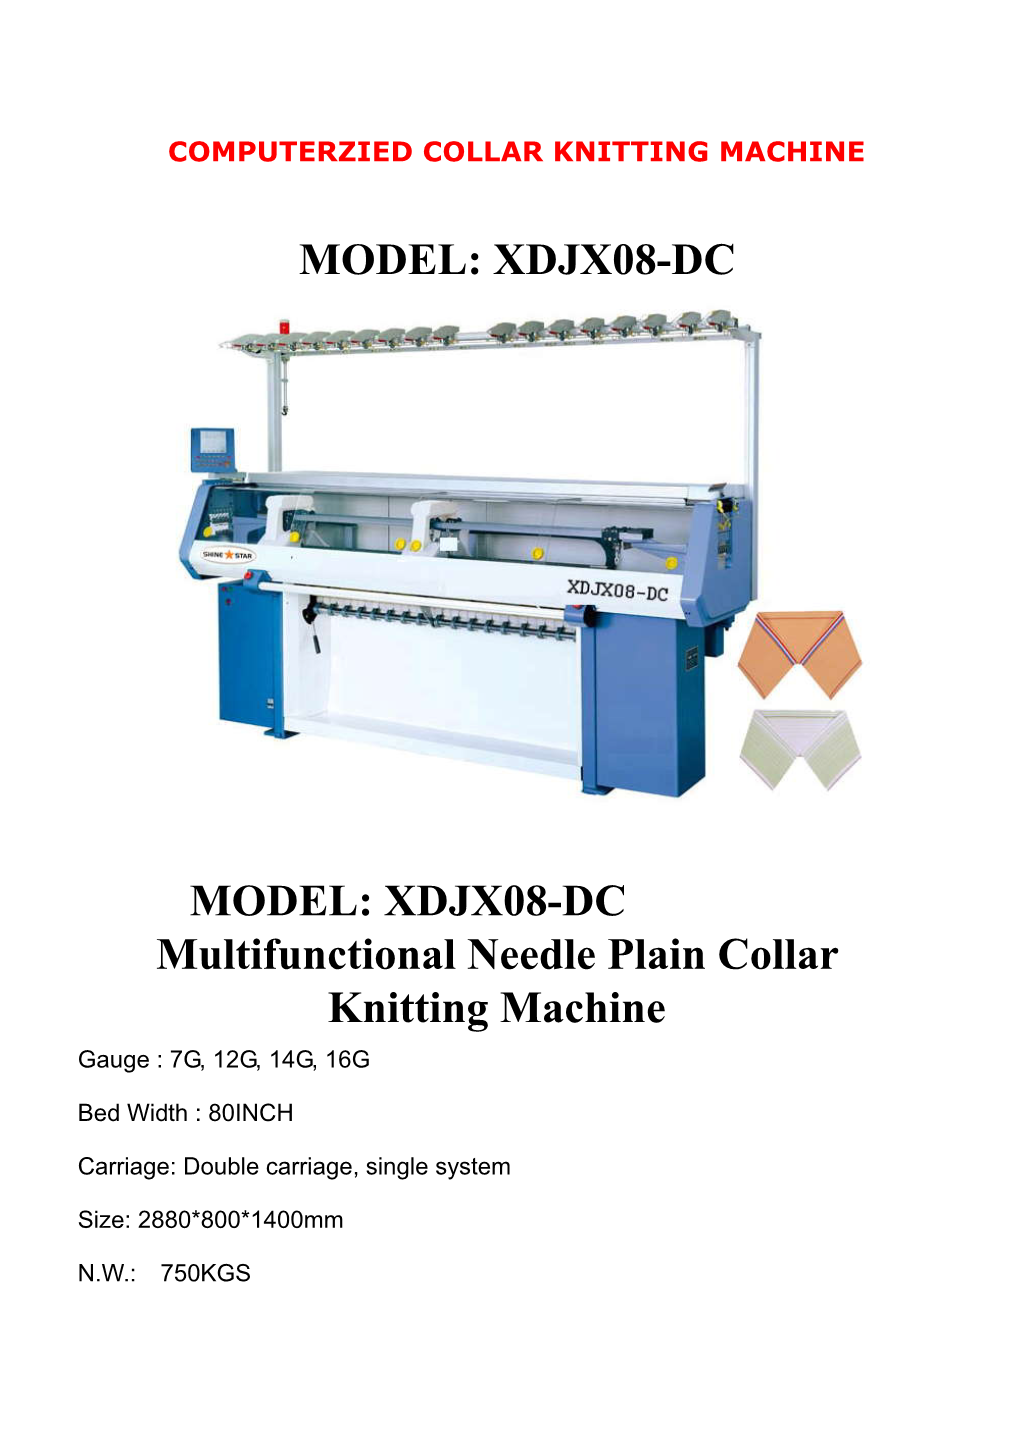 XDJX08-DC Multifunctional Needle Plain Collar Knitting Machine Gauge : 7G, 12G, 14G, 16G